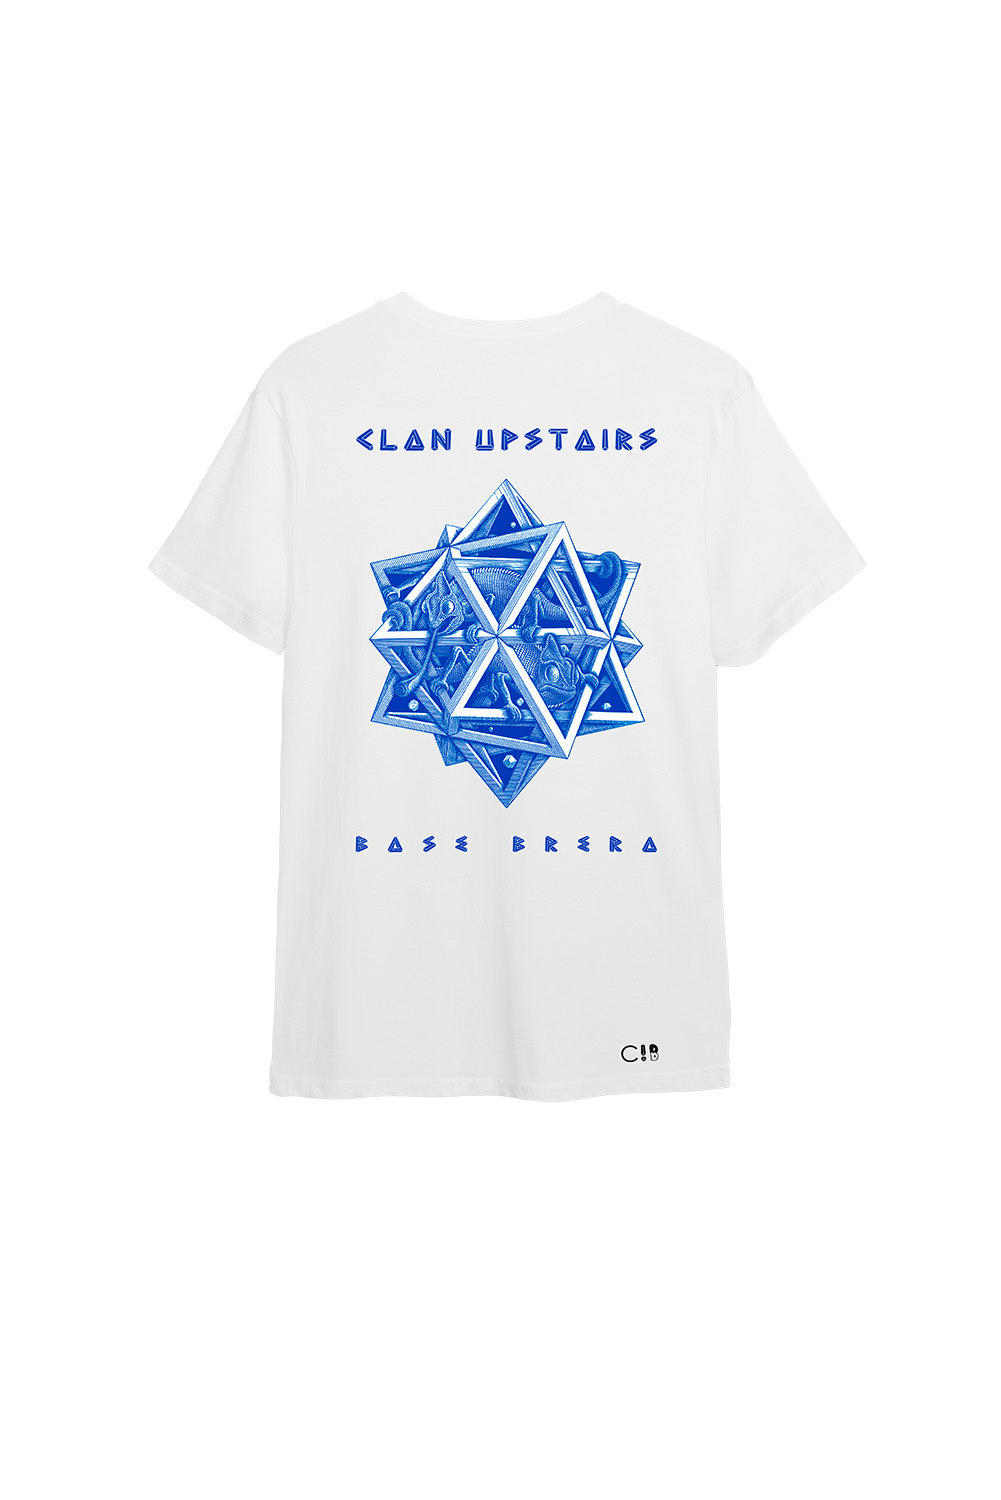 T-shirt Clan Upstairs